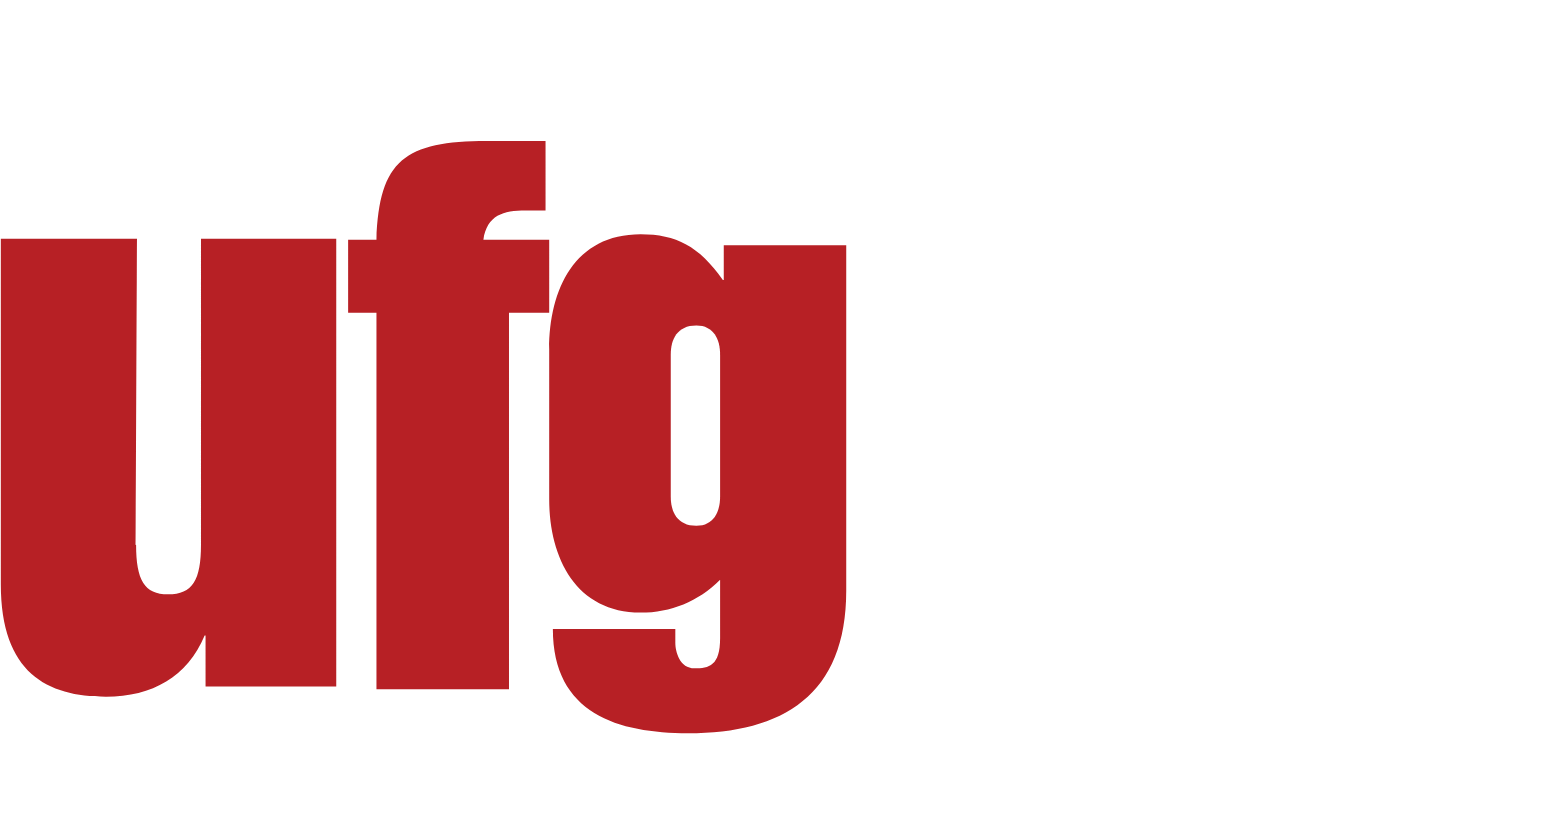 United Fire Group logo large for dark backgrounds (transparent PNG)